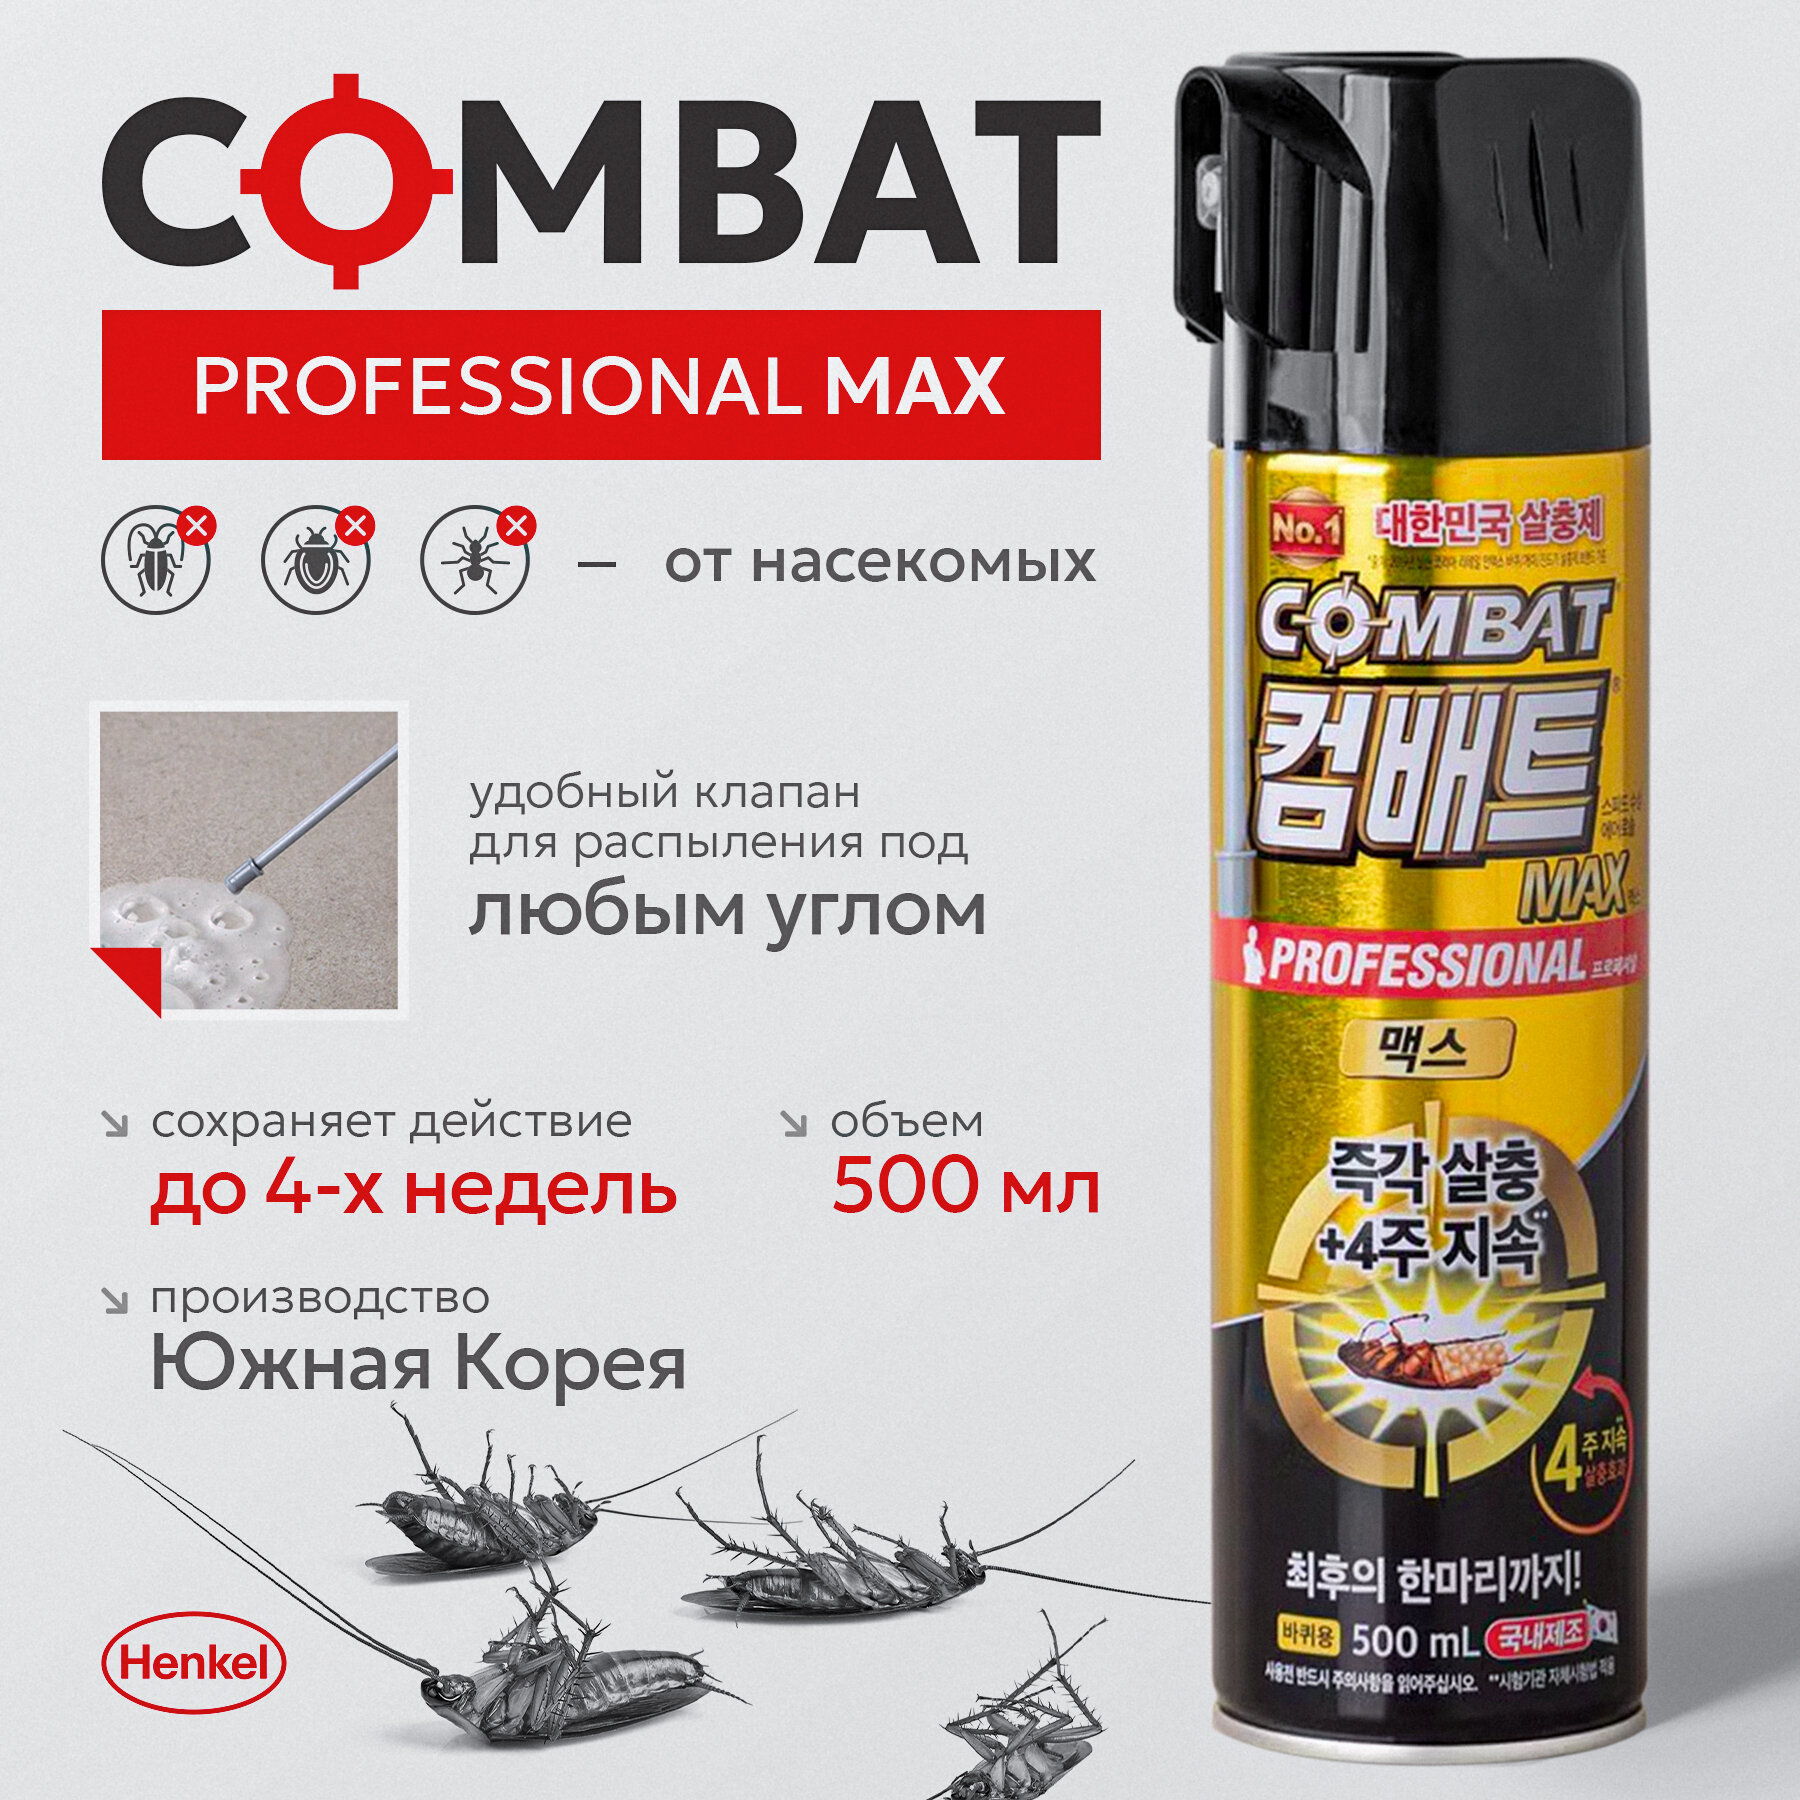 Combat MAX Super Spray / Средство от тараканов комбат золотой макс / 500м